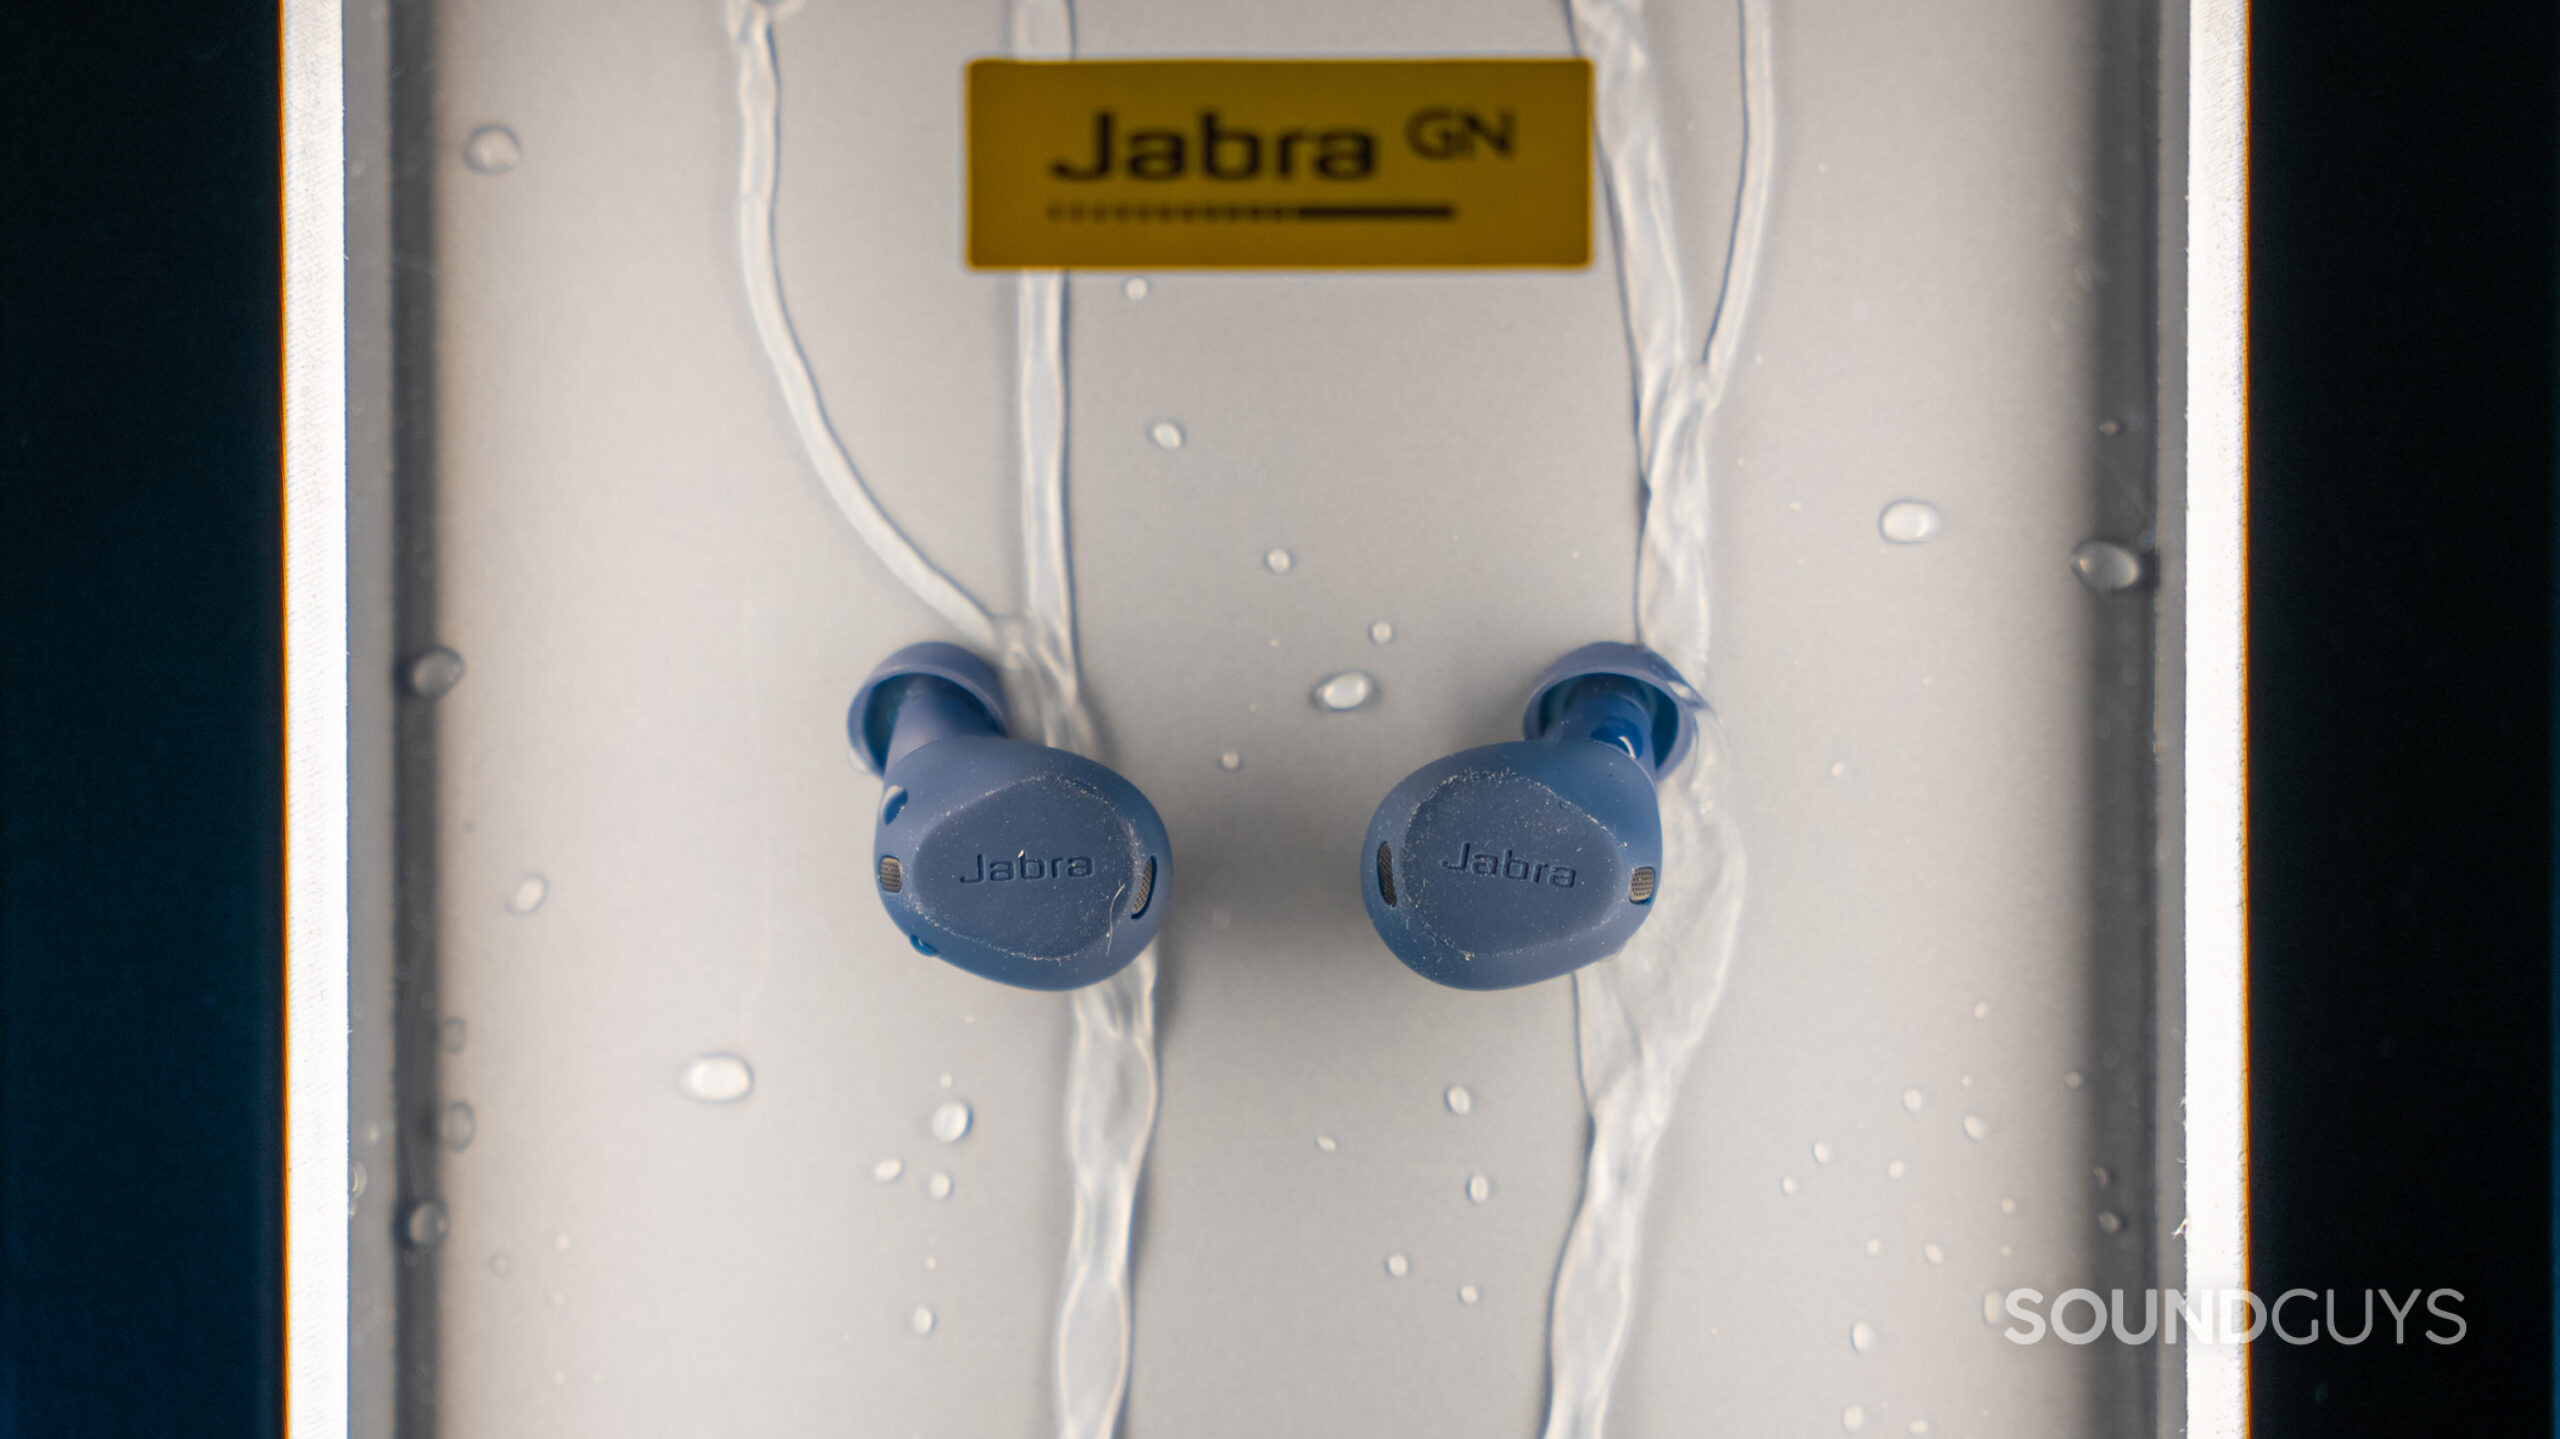 The Jabra Elite 8 Active has a better ingress protection rating than the Jabra Elite 10.